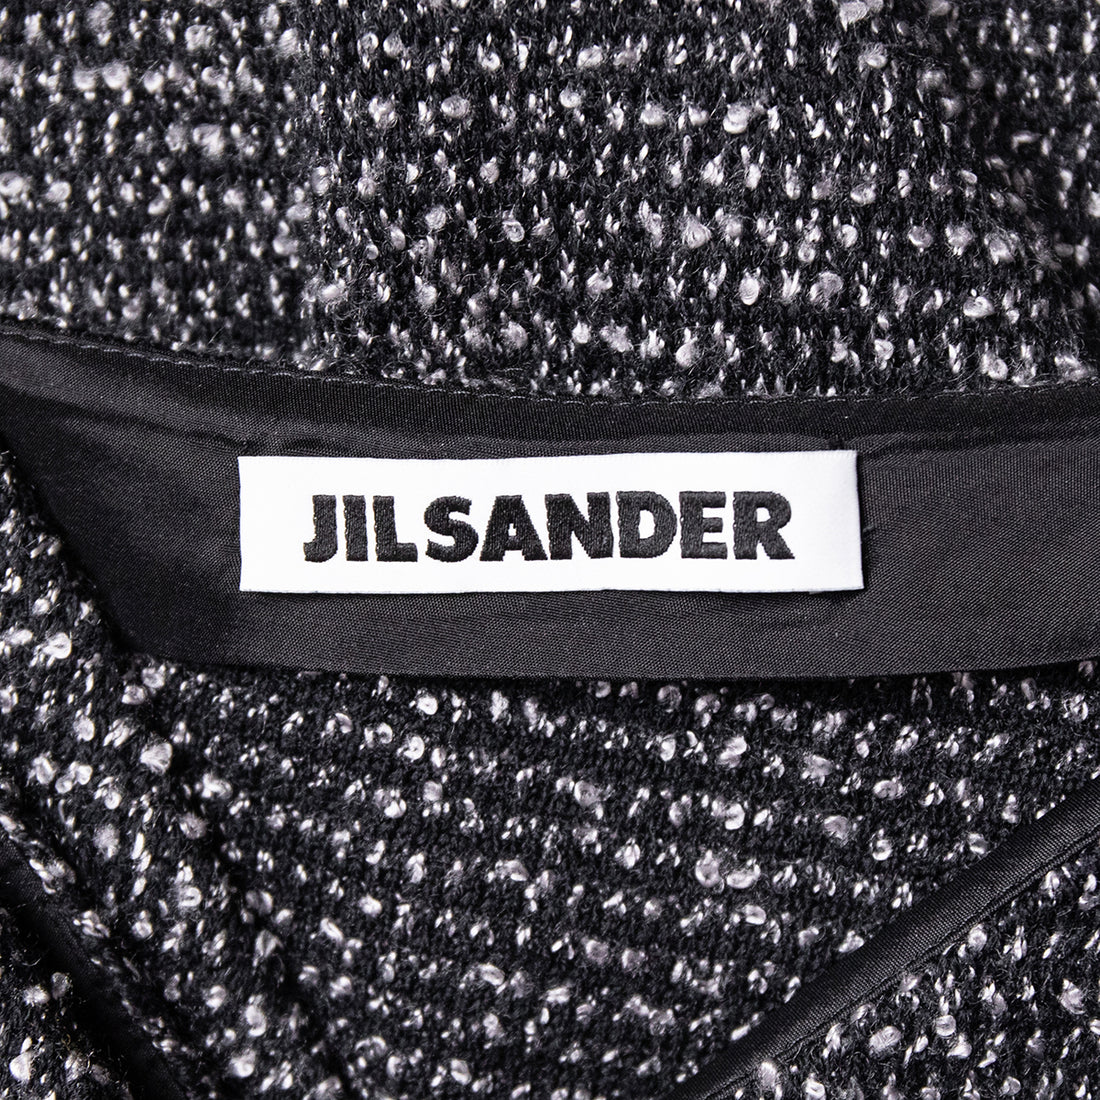 Jil Sander Light tweed dress with button placket